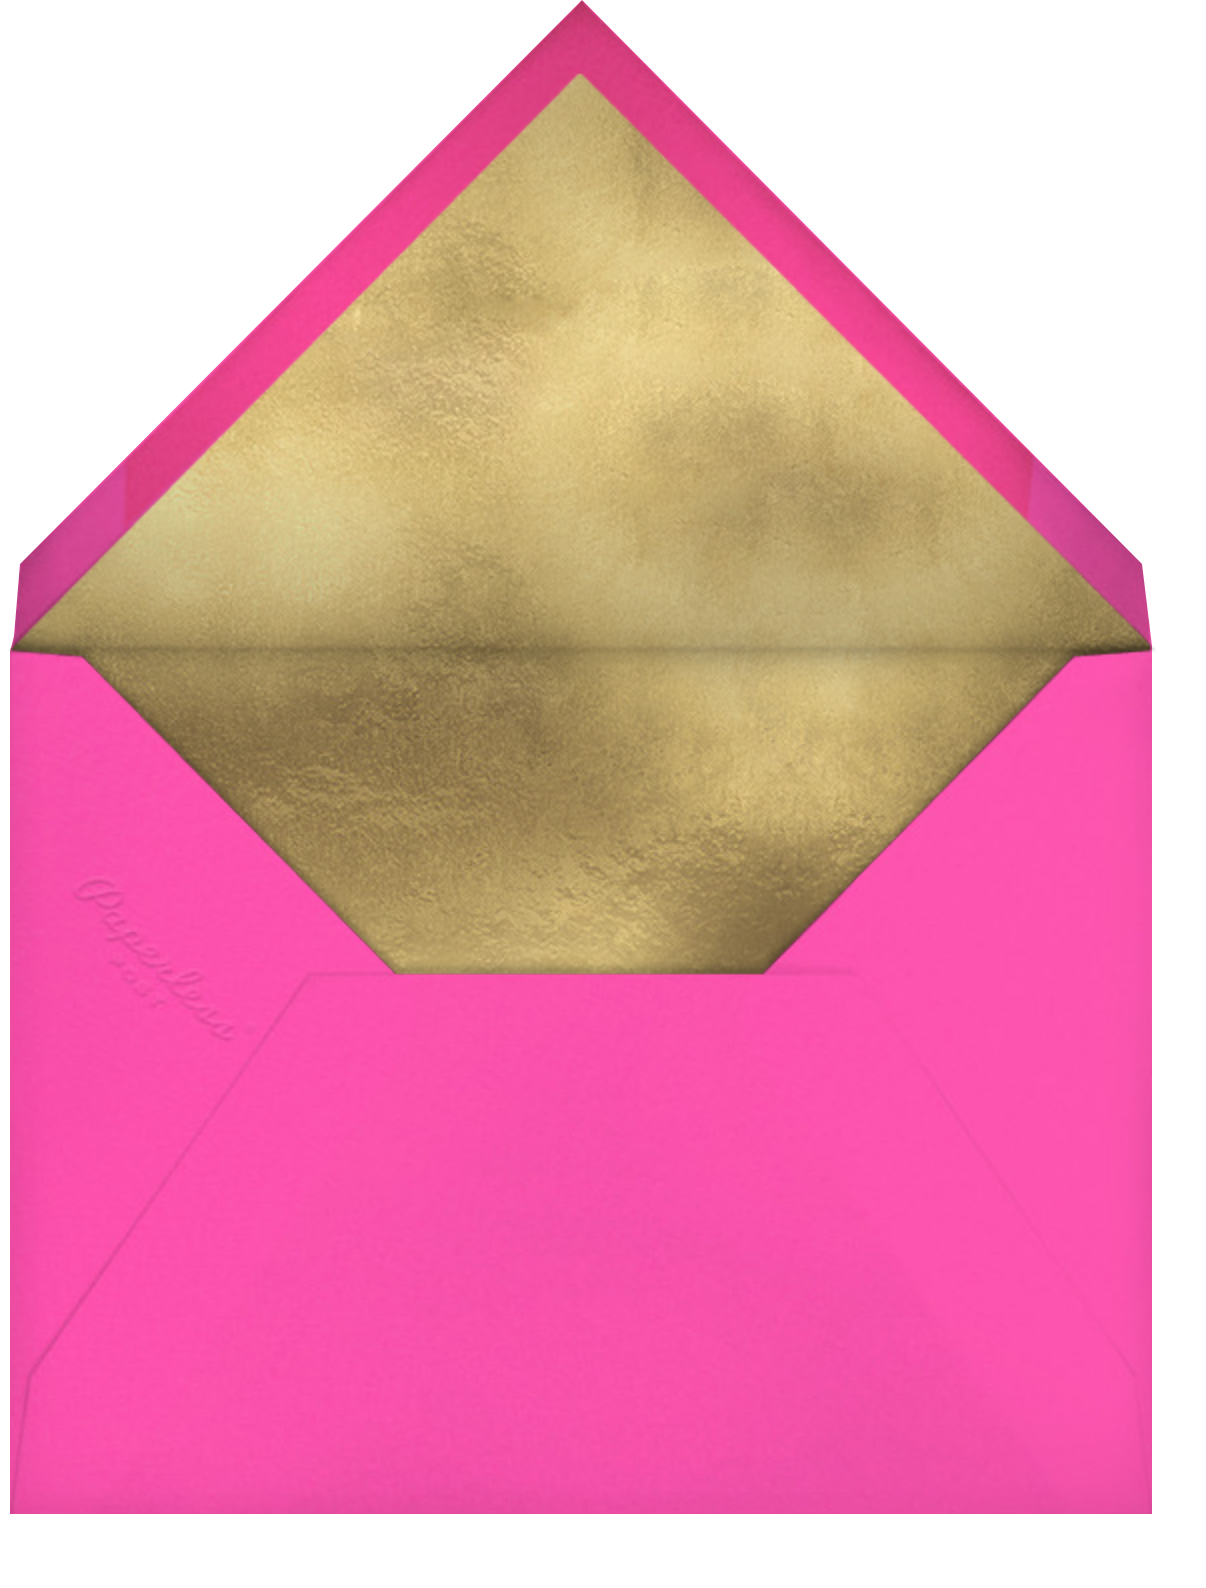 Dvaar (Stationery) - Schiaparelli - Paperless Post - Envelope